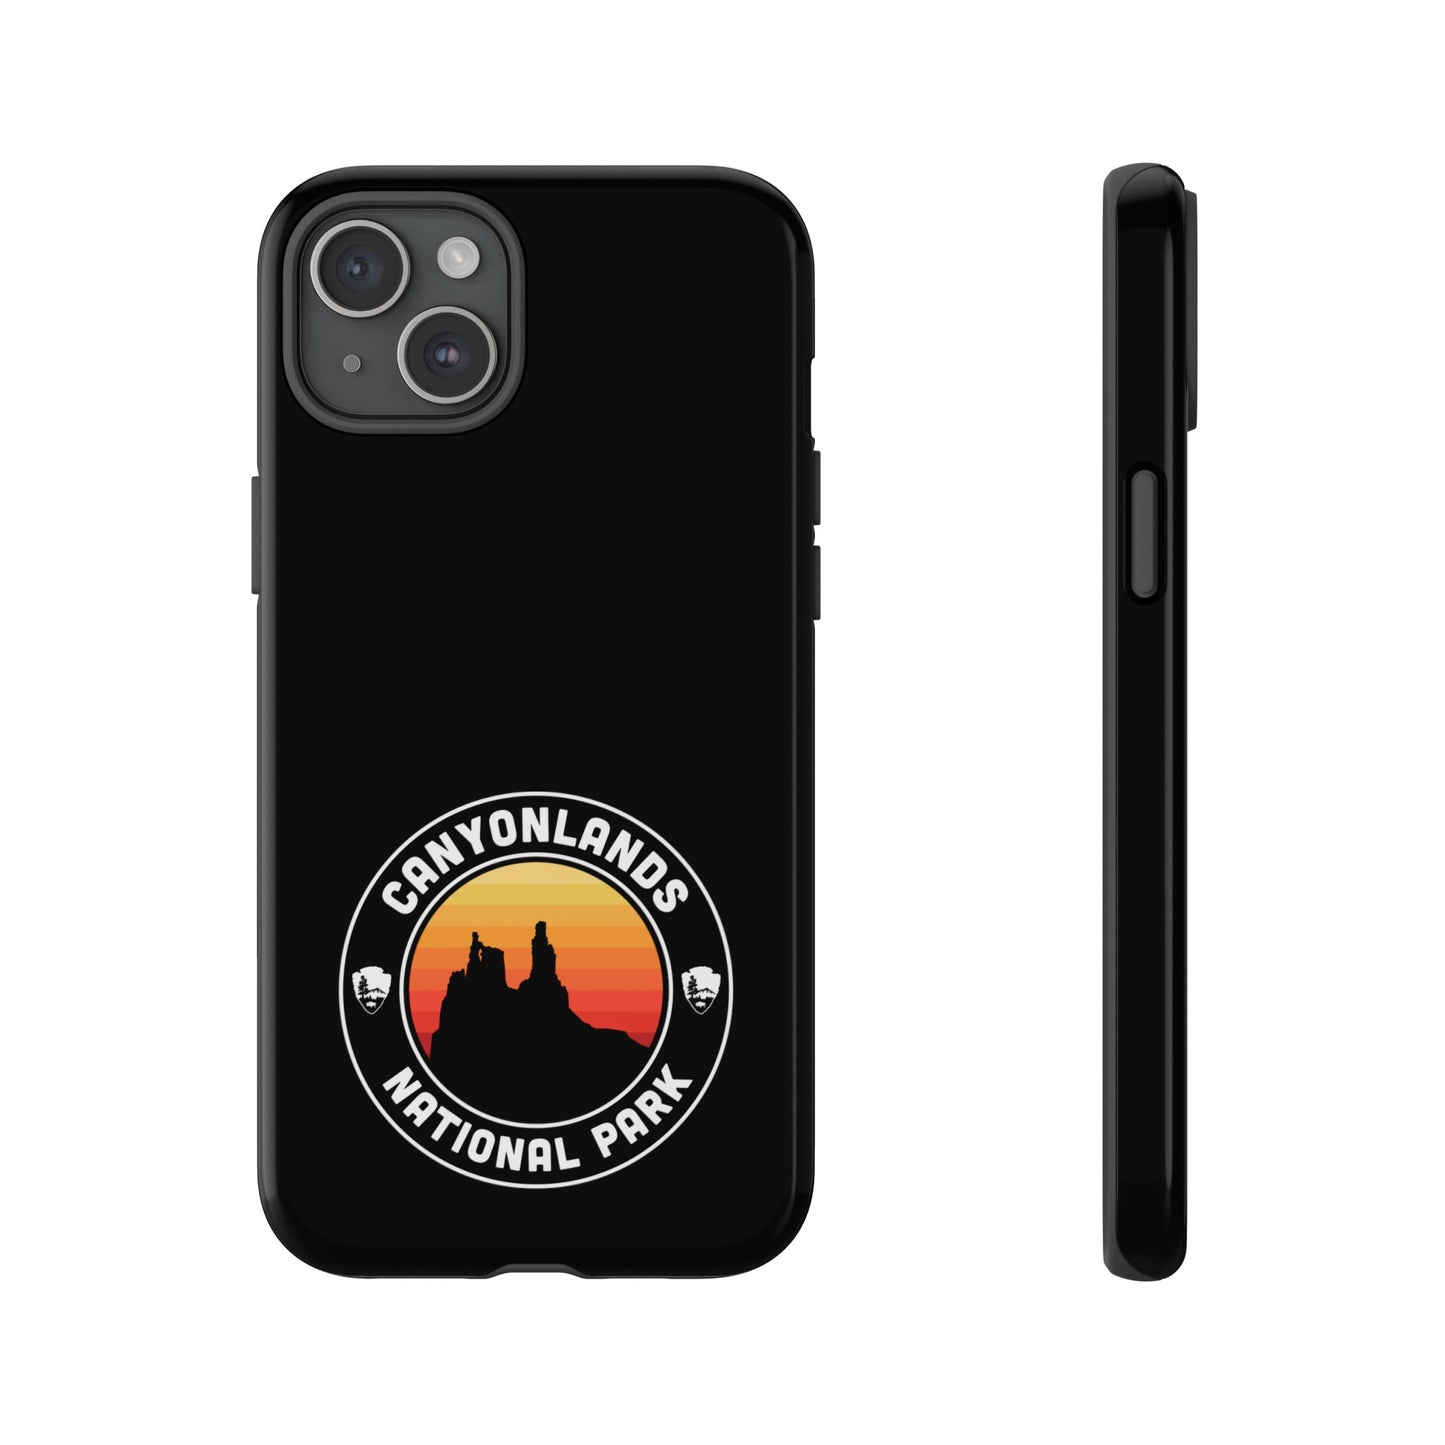 Canyonlands National Park Phone Case - Round Emblem Design